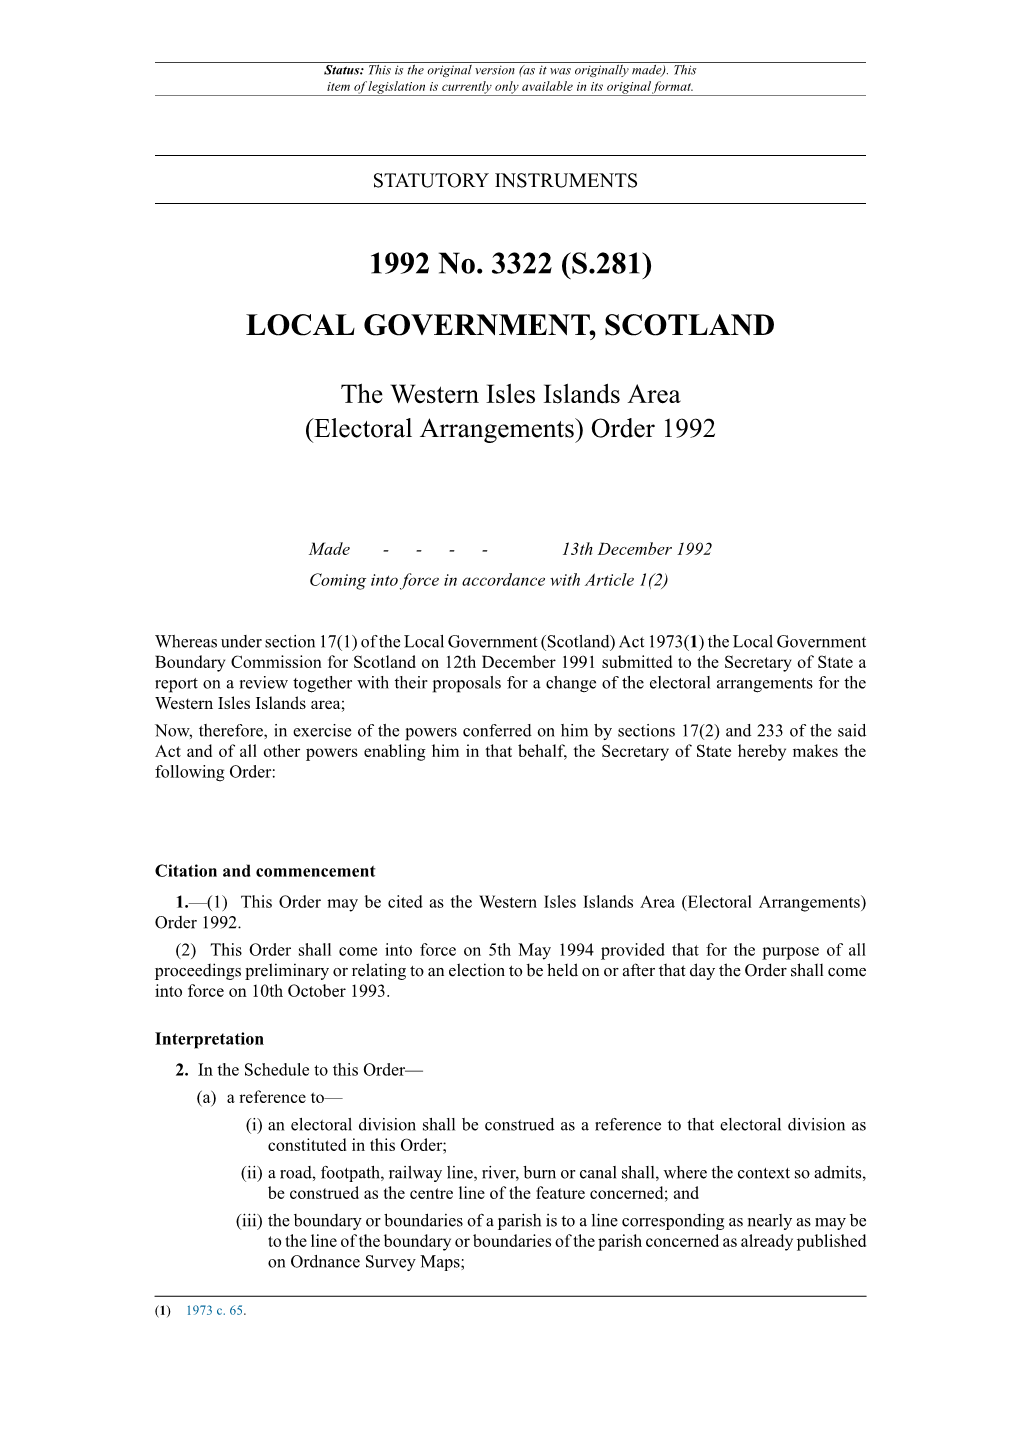 The Western Isles Islands Area (Electoral Arrangements) Order 1992